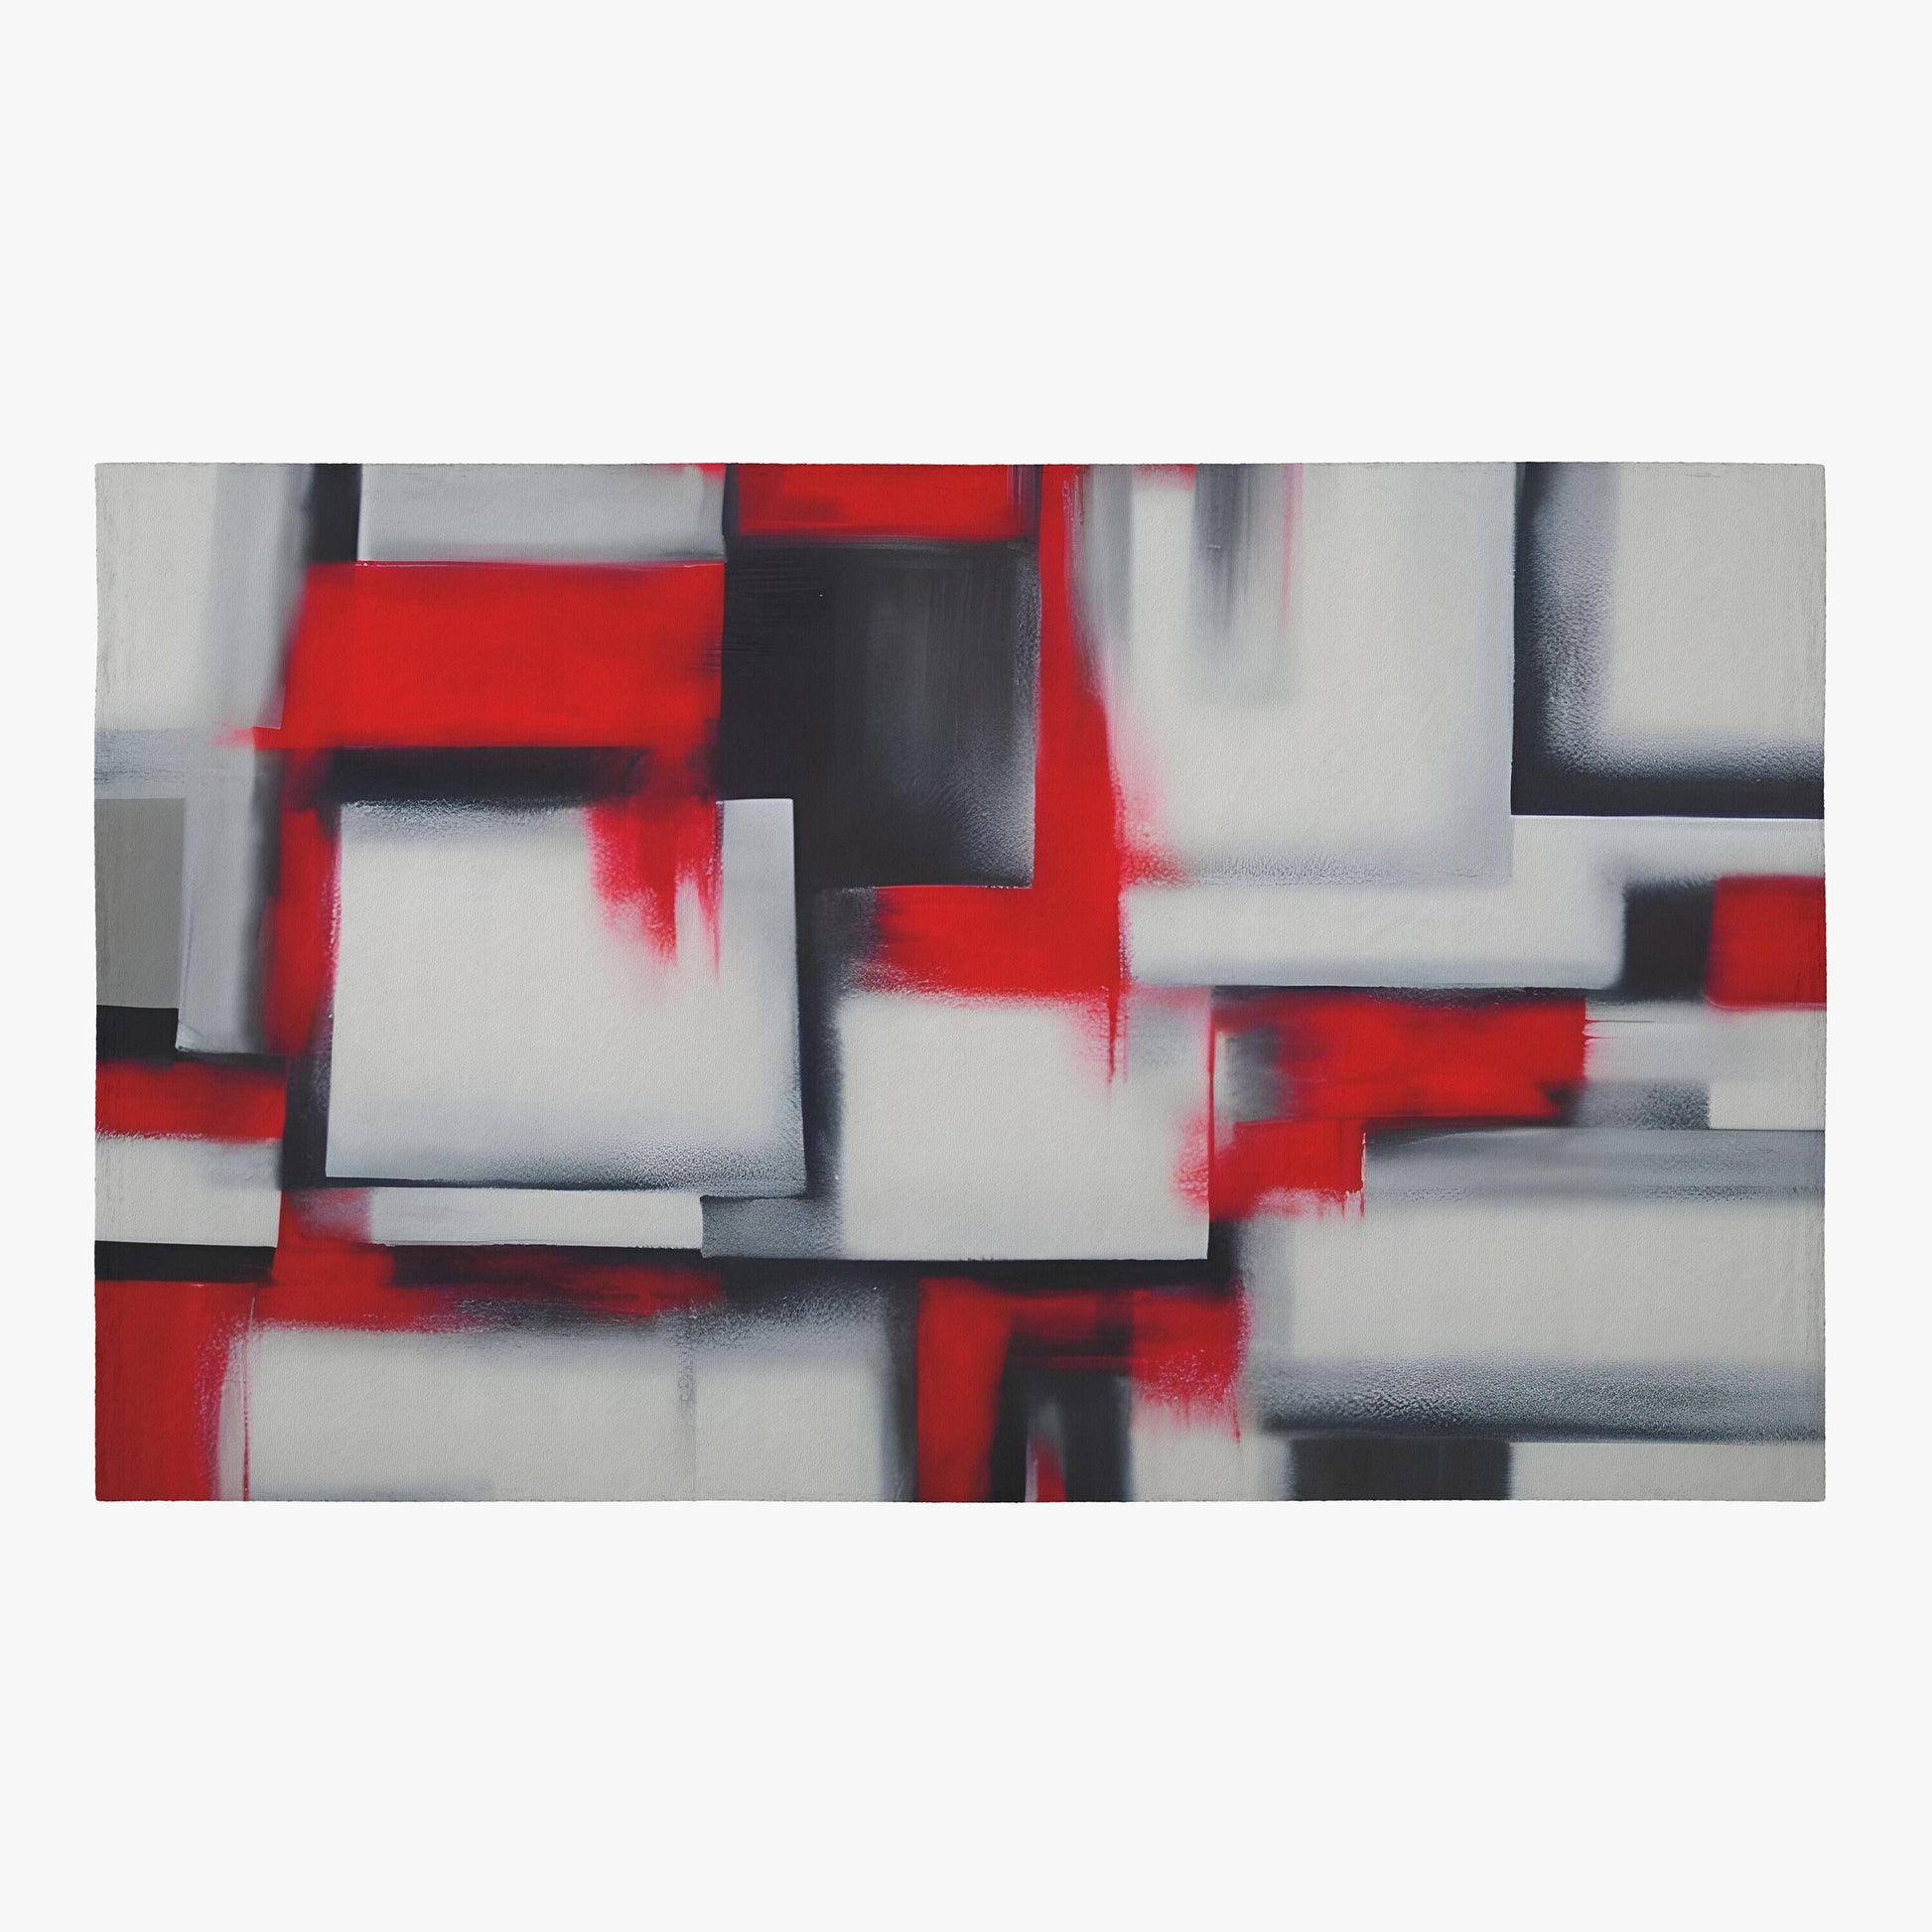 Abstract Art Rug red black white Rug Modern art Floor Rugs 3'x5' 4'x6' 5'x7' 8' x 10' Large rugs